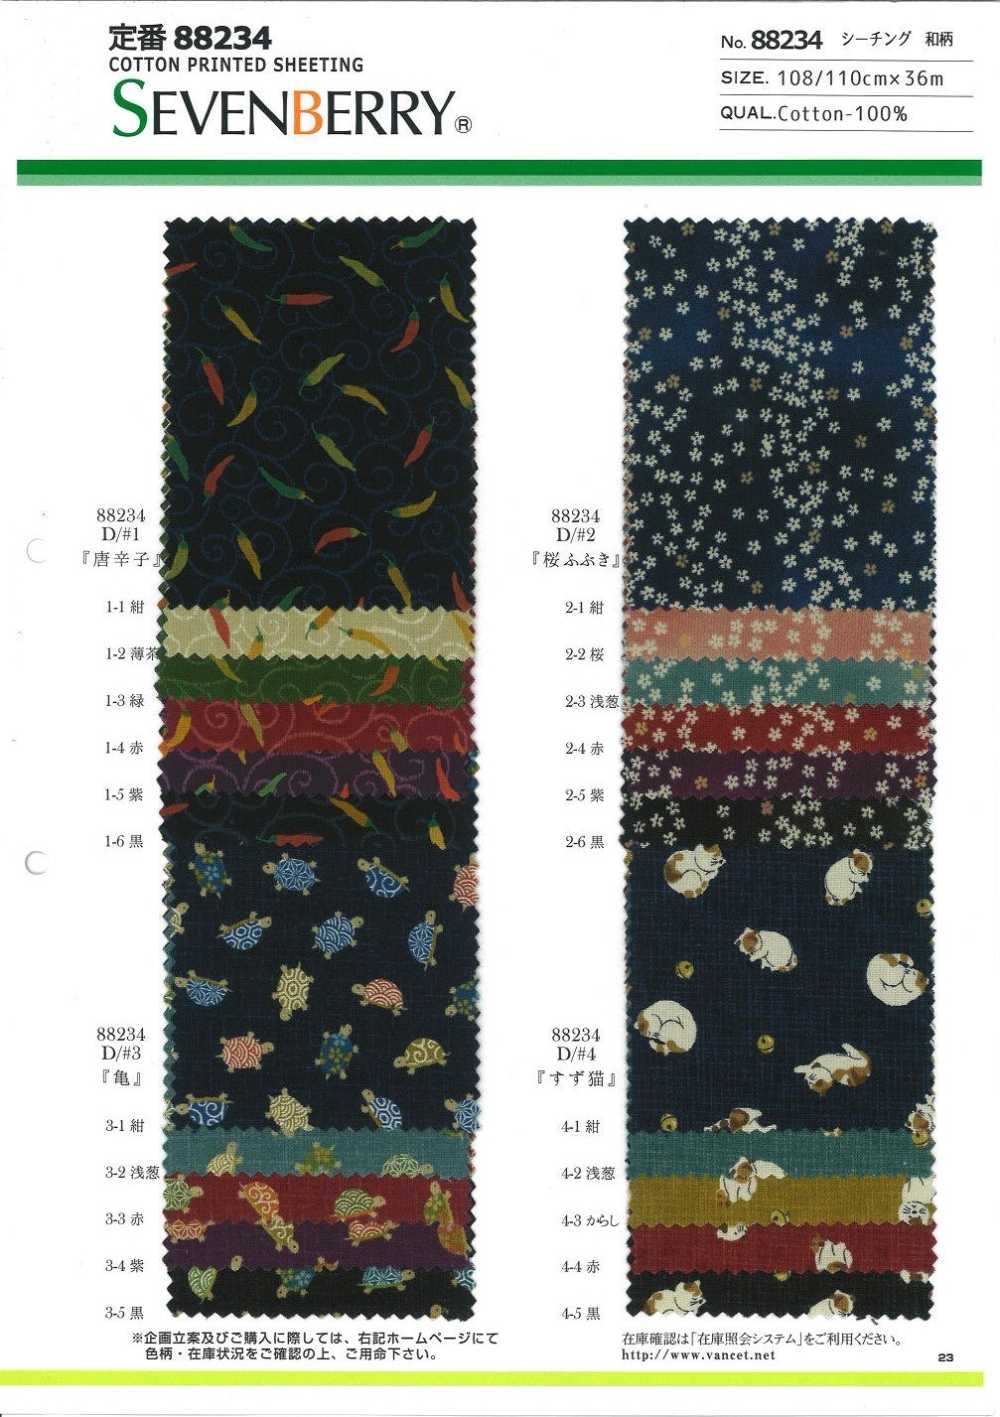 88234 Japanischer Loomstate-Muster-Chili-Pfeffer[Textilgewebe] VANCET